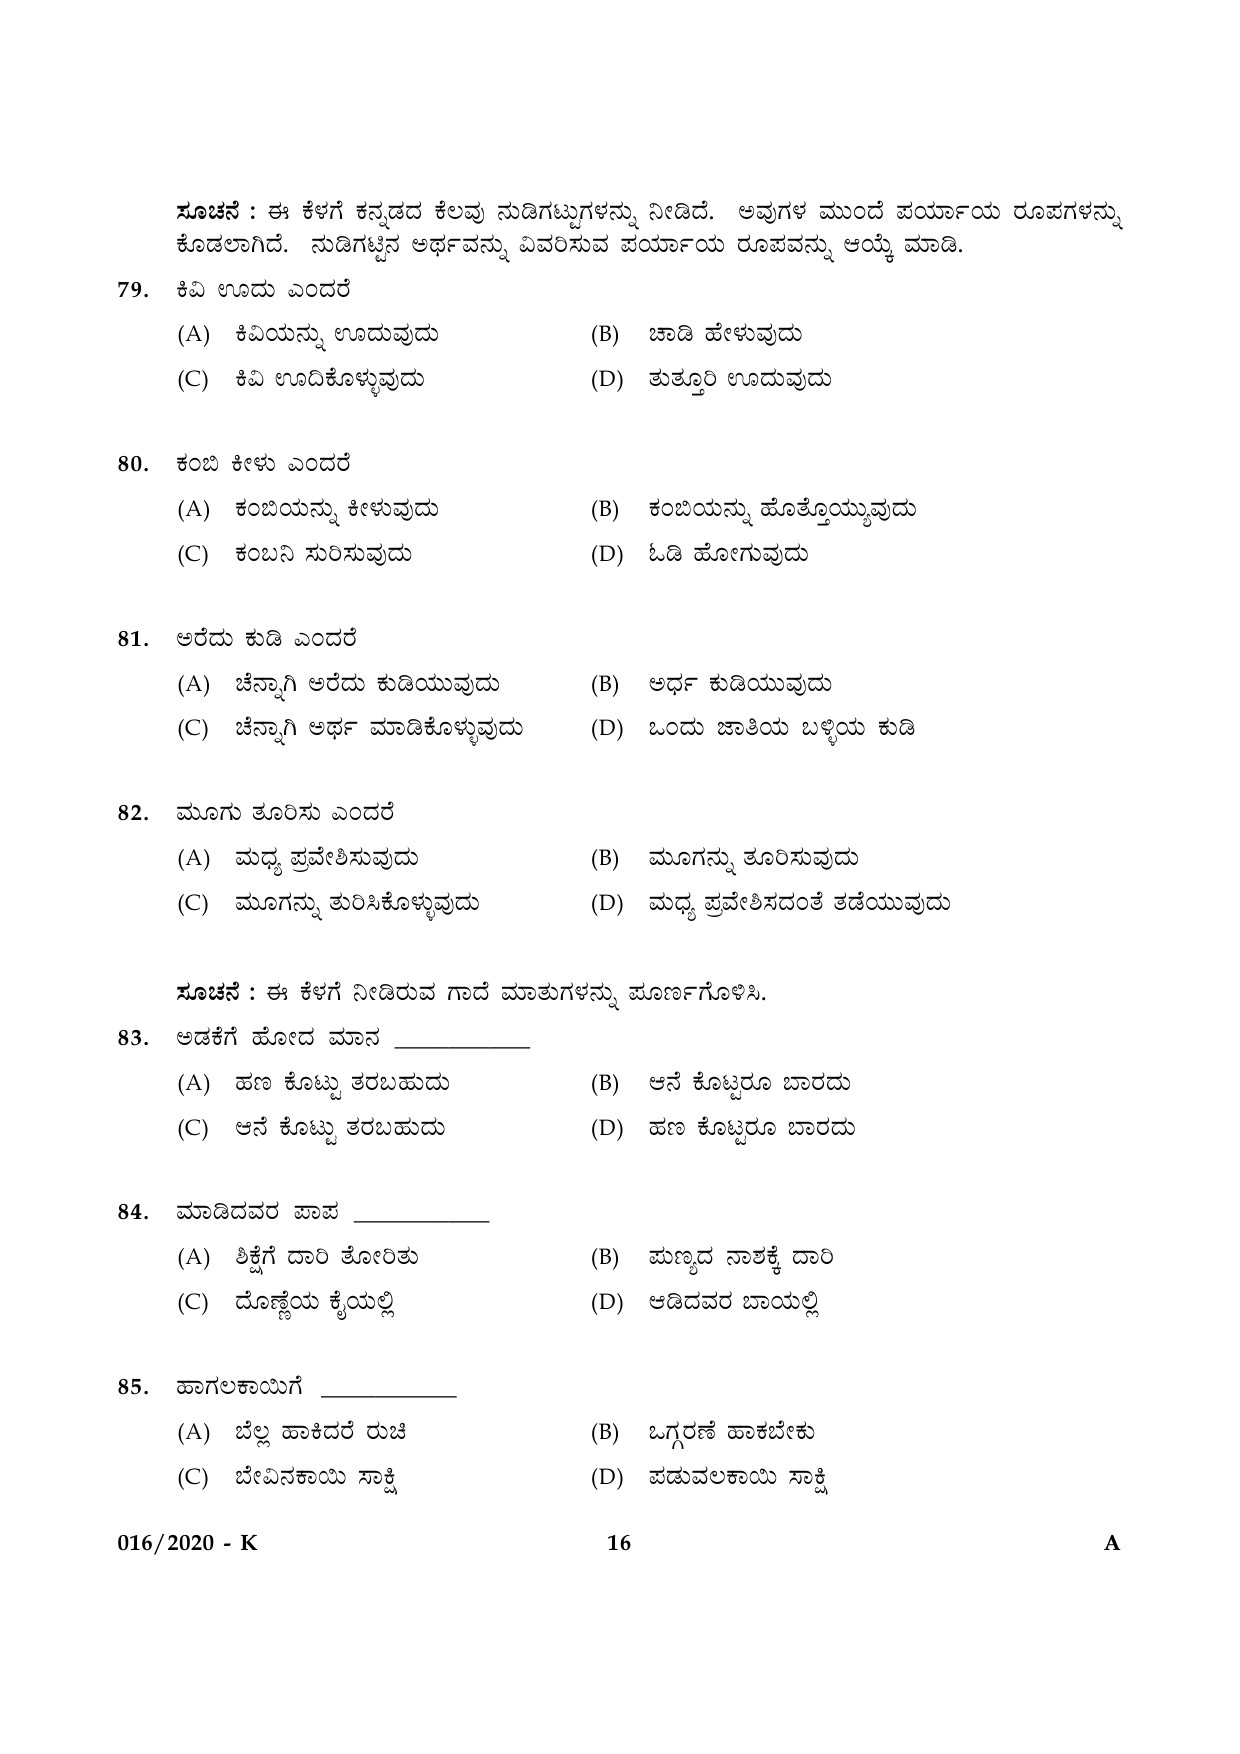 KAS Officer Trainee Kannada Exam 2020 Code 0162020 15